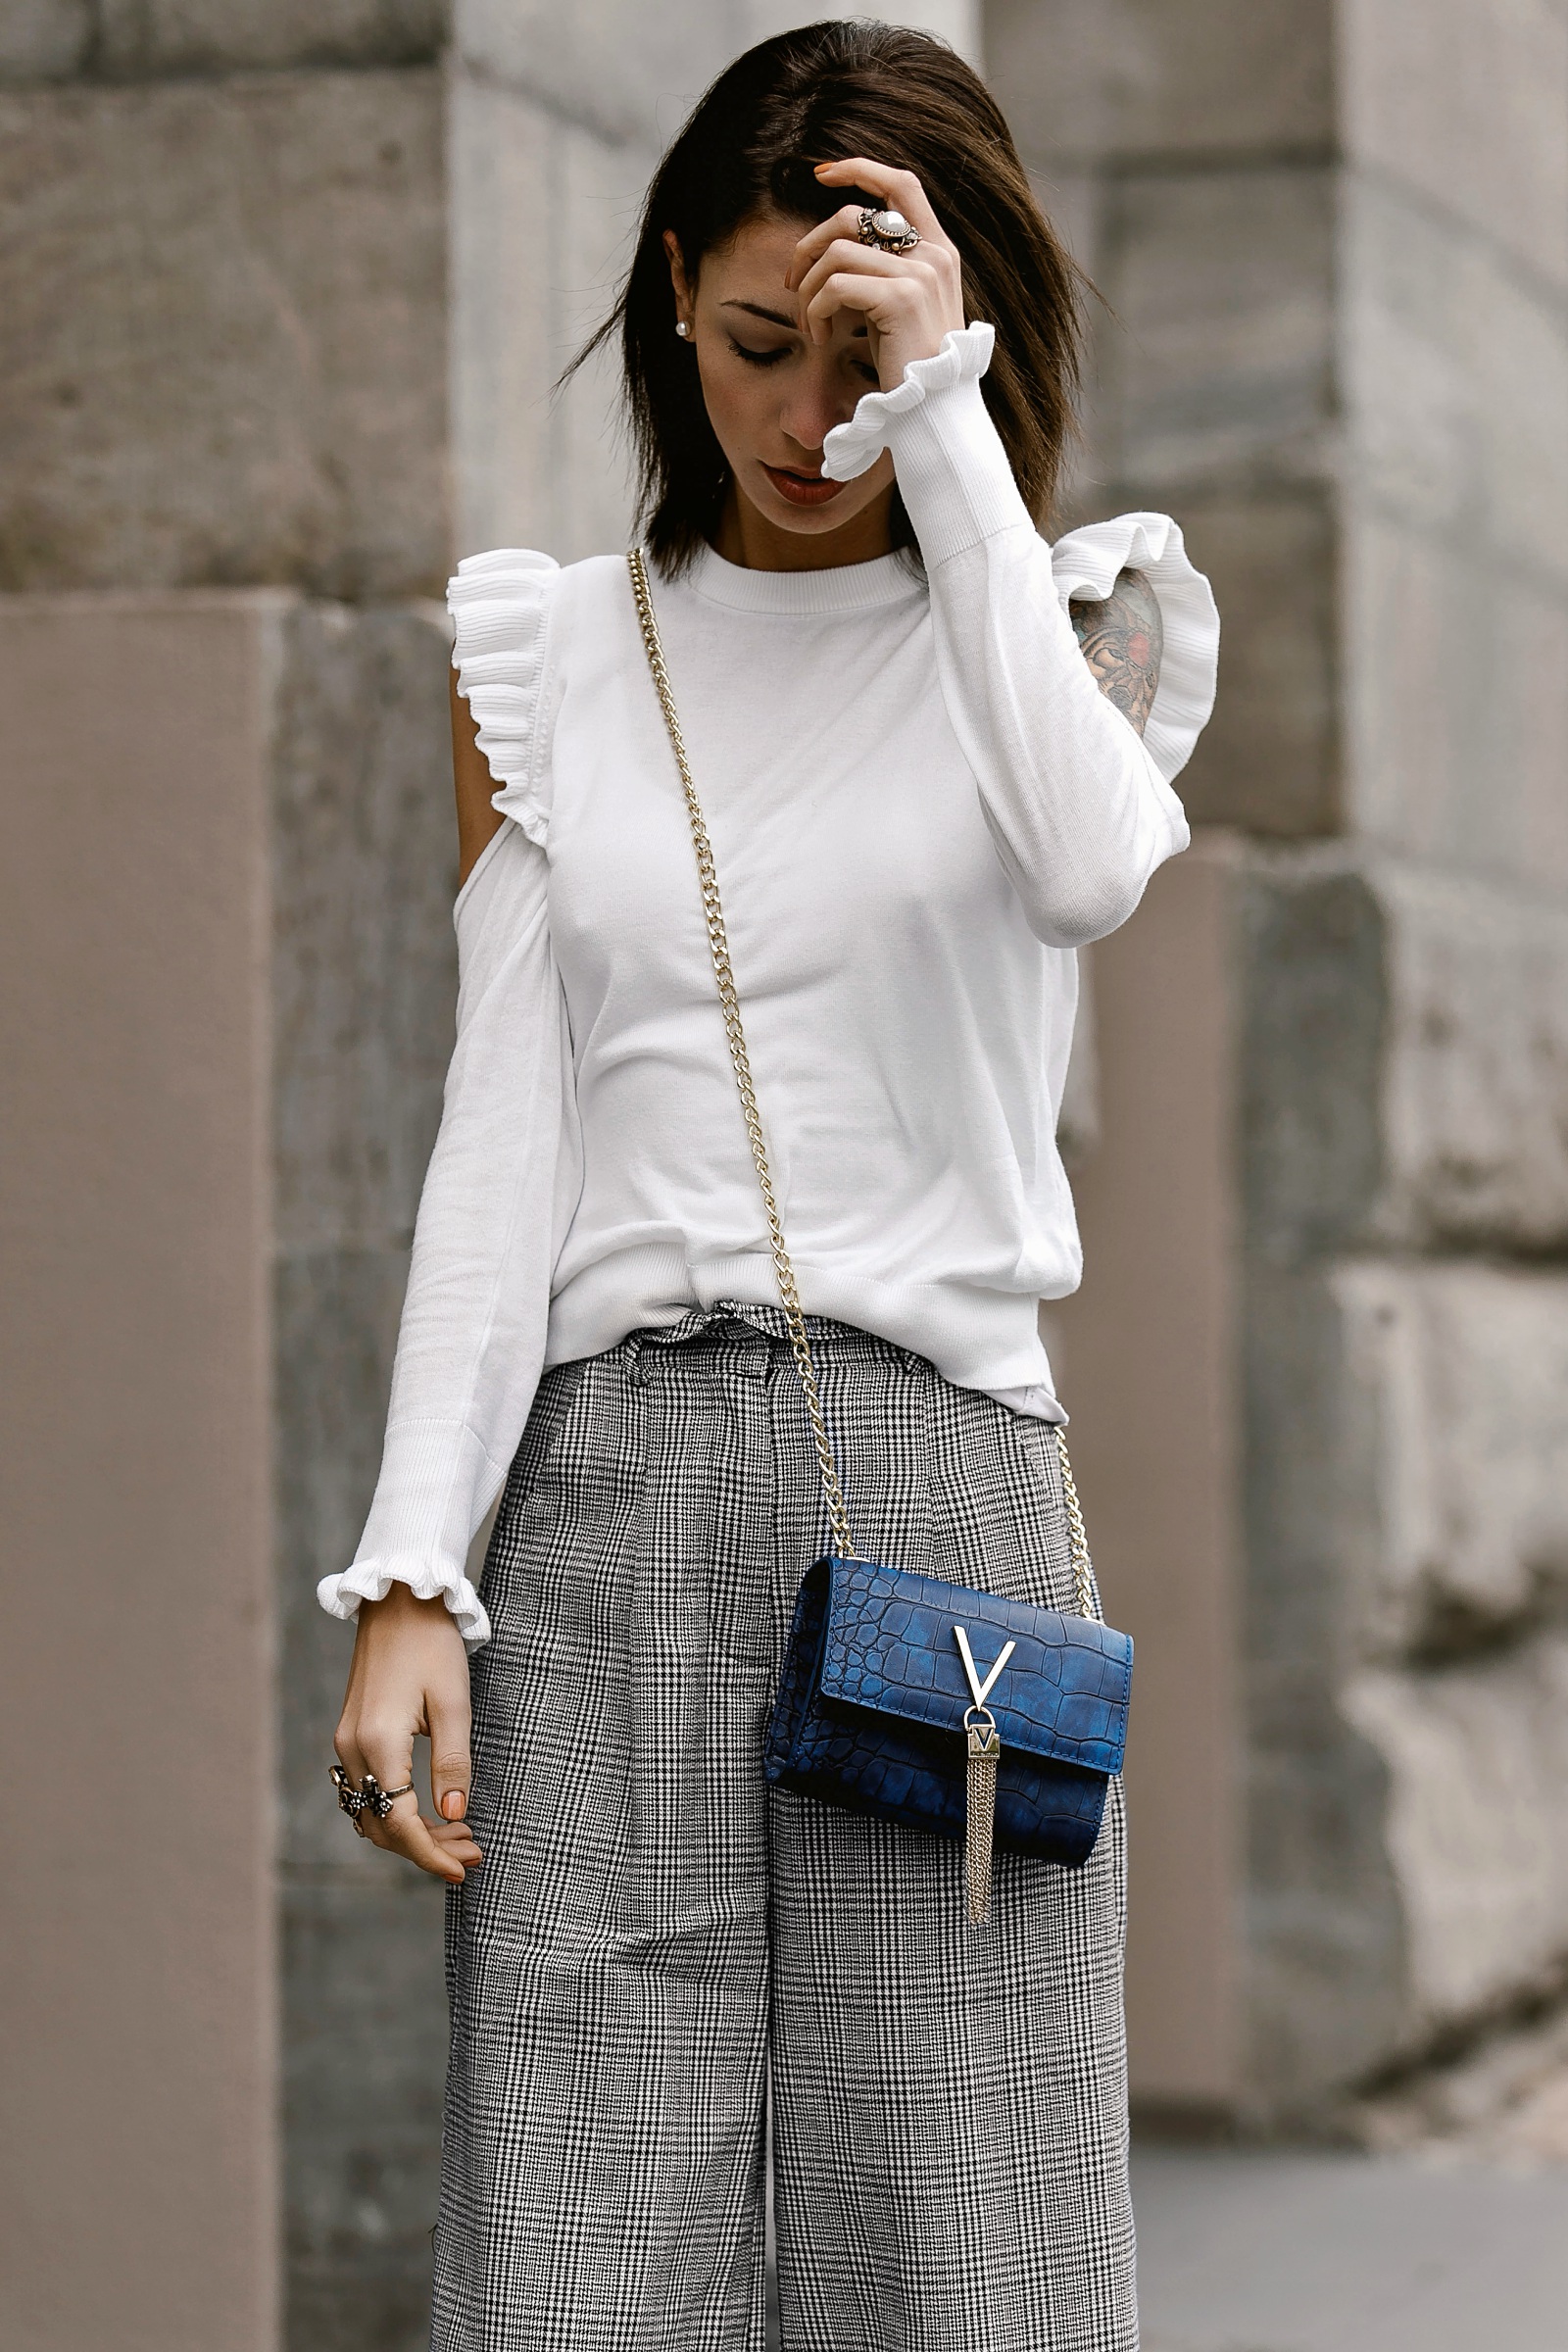 deutsche-mode-blogger-fashionblogger-hohe-qualität-hohe-reichweite-jasmin-kessler-couture-de-coeur-4